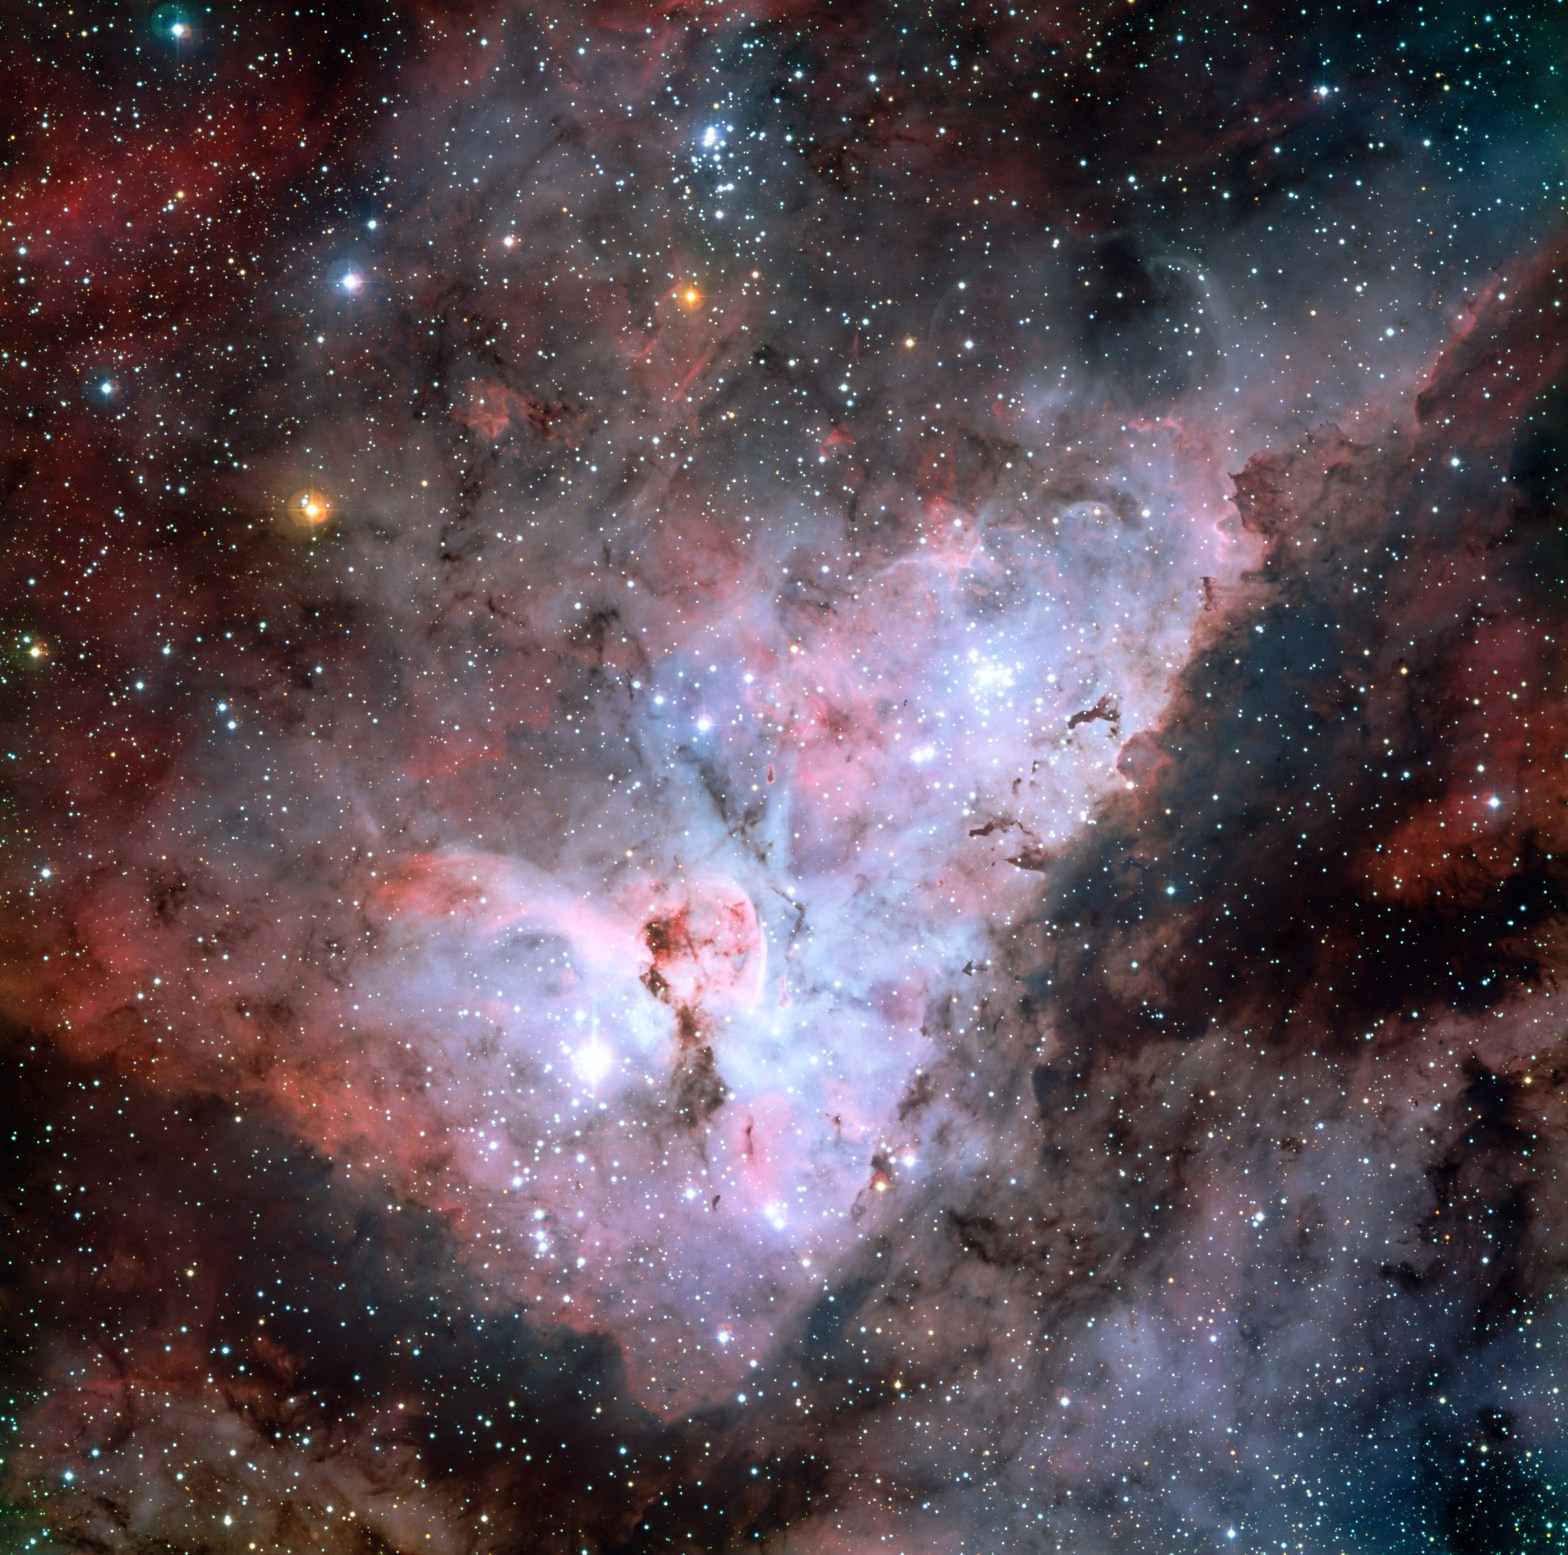 Color-composite image of the Carina Nebula.